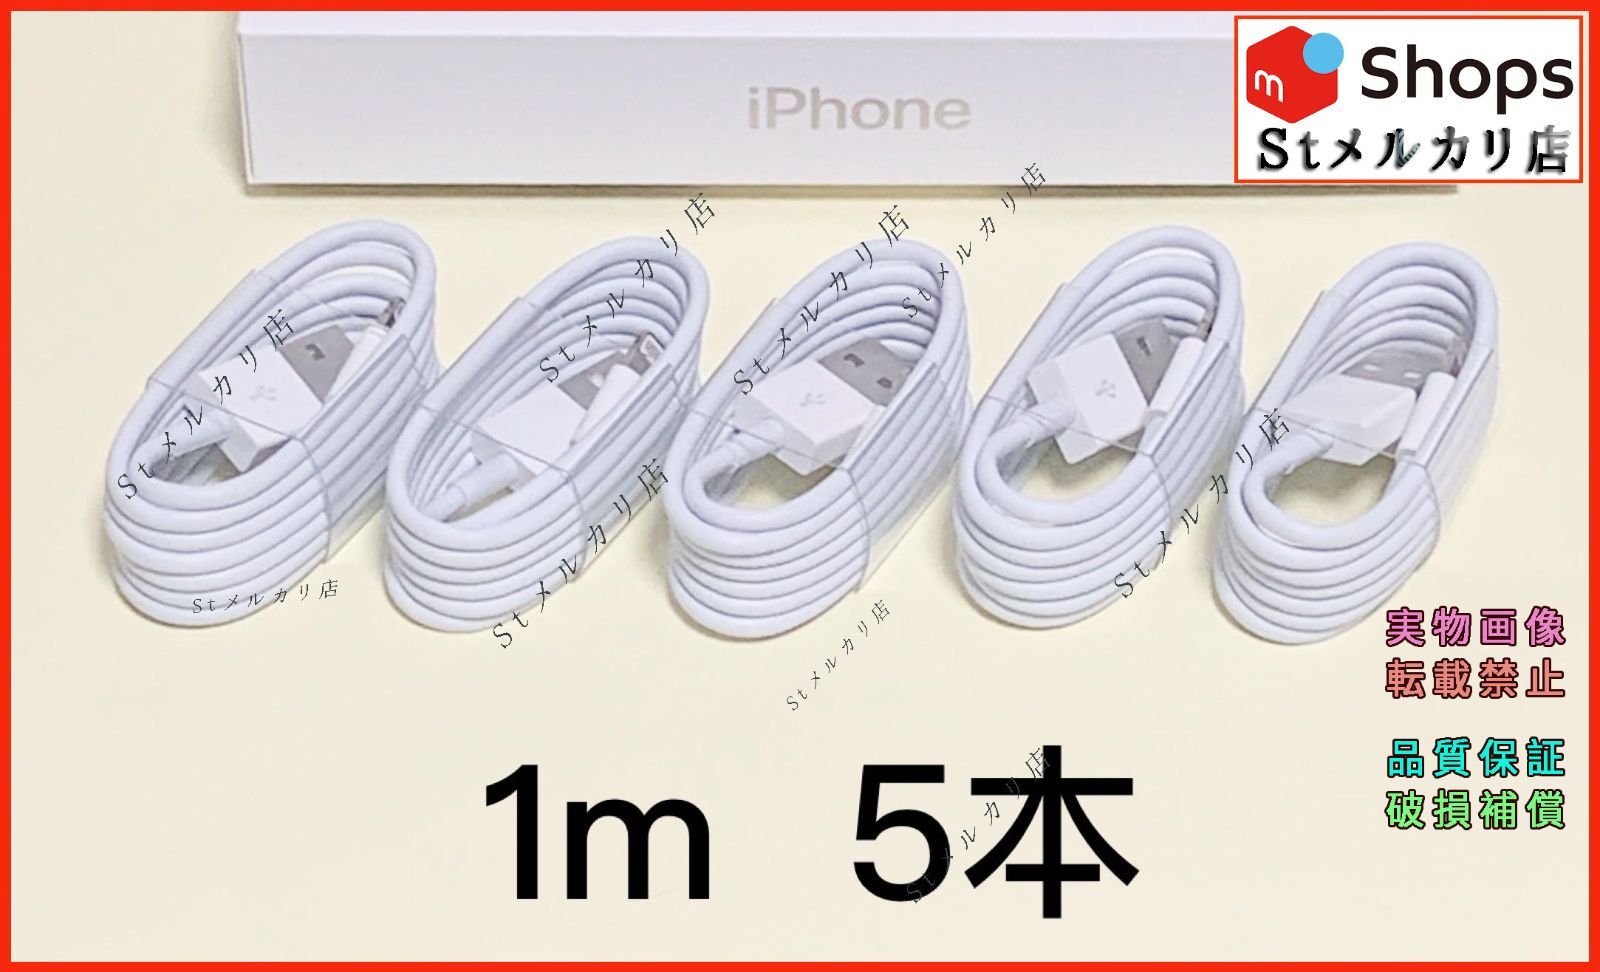 1M 5本 iPhone ライトニングケーブル USB充電器 アイフォンケーブル 純正品同等 新品 St-Hh メルカリShops